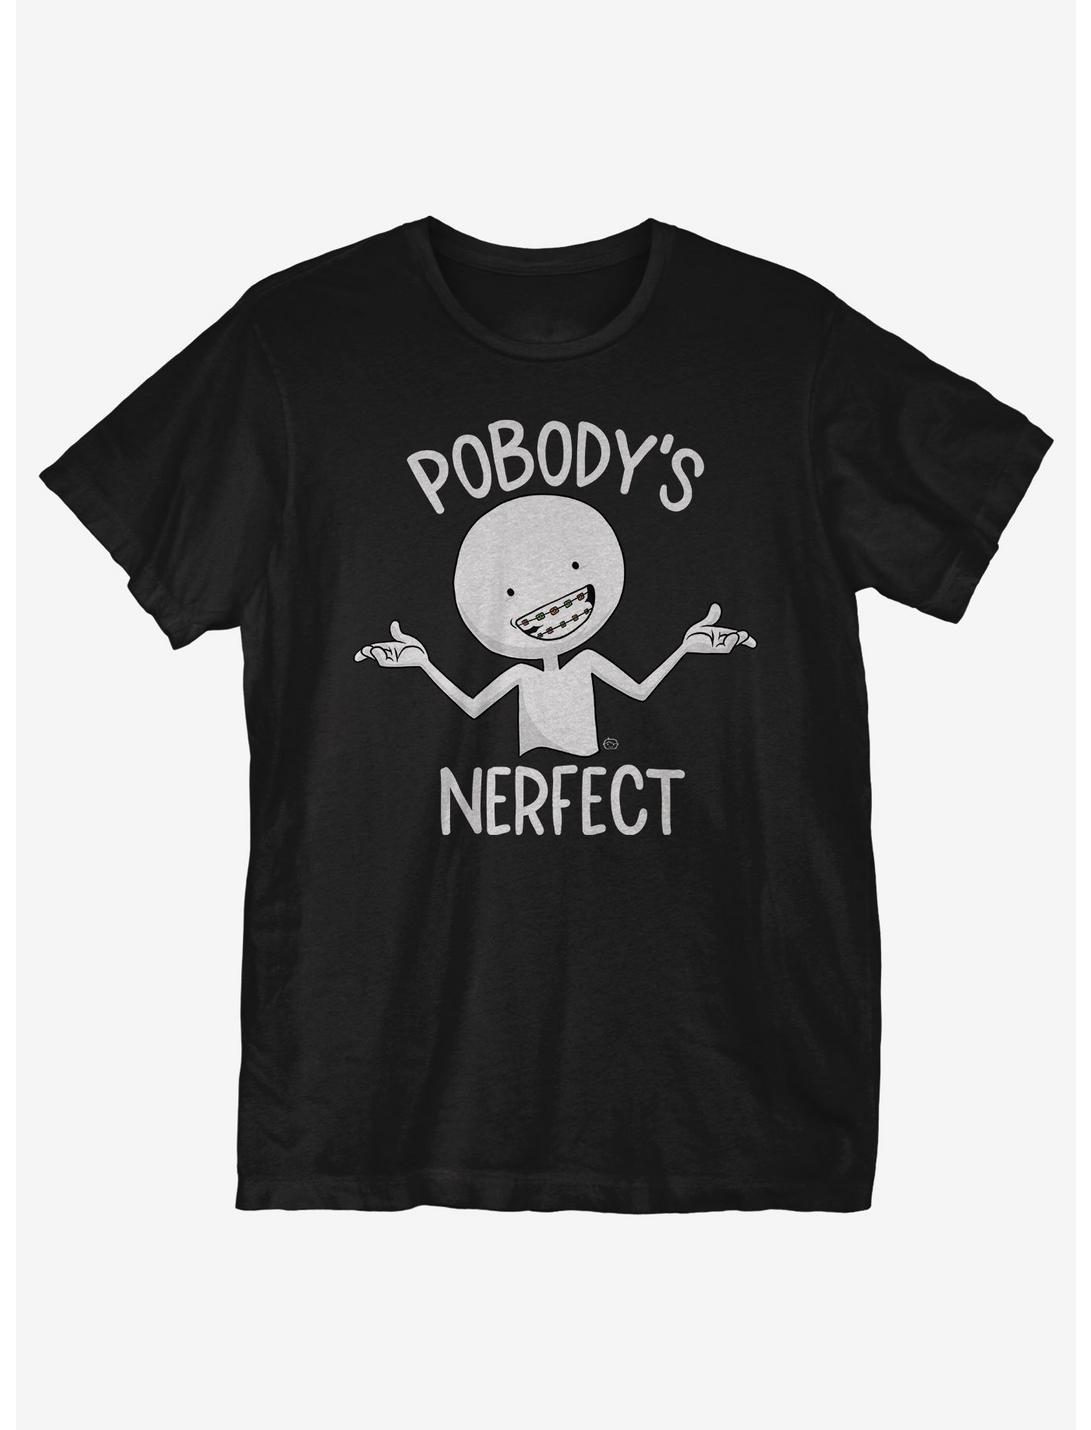 Pobody's Nerfect T-Shirt, BLACK, hi-res